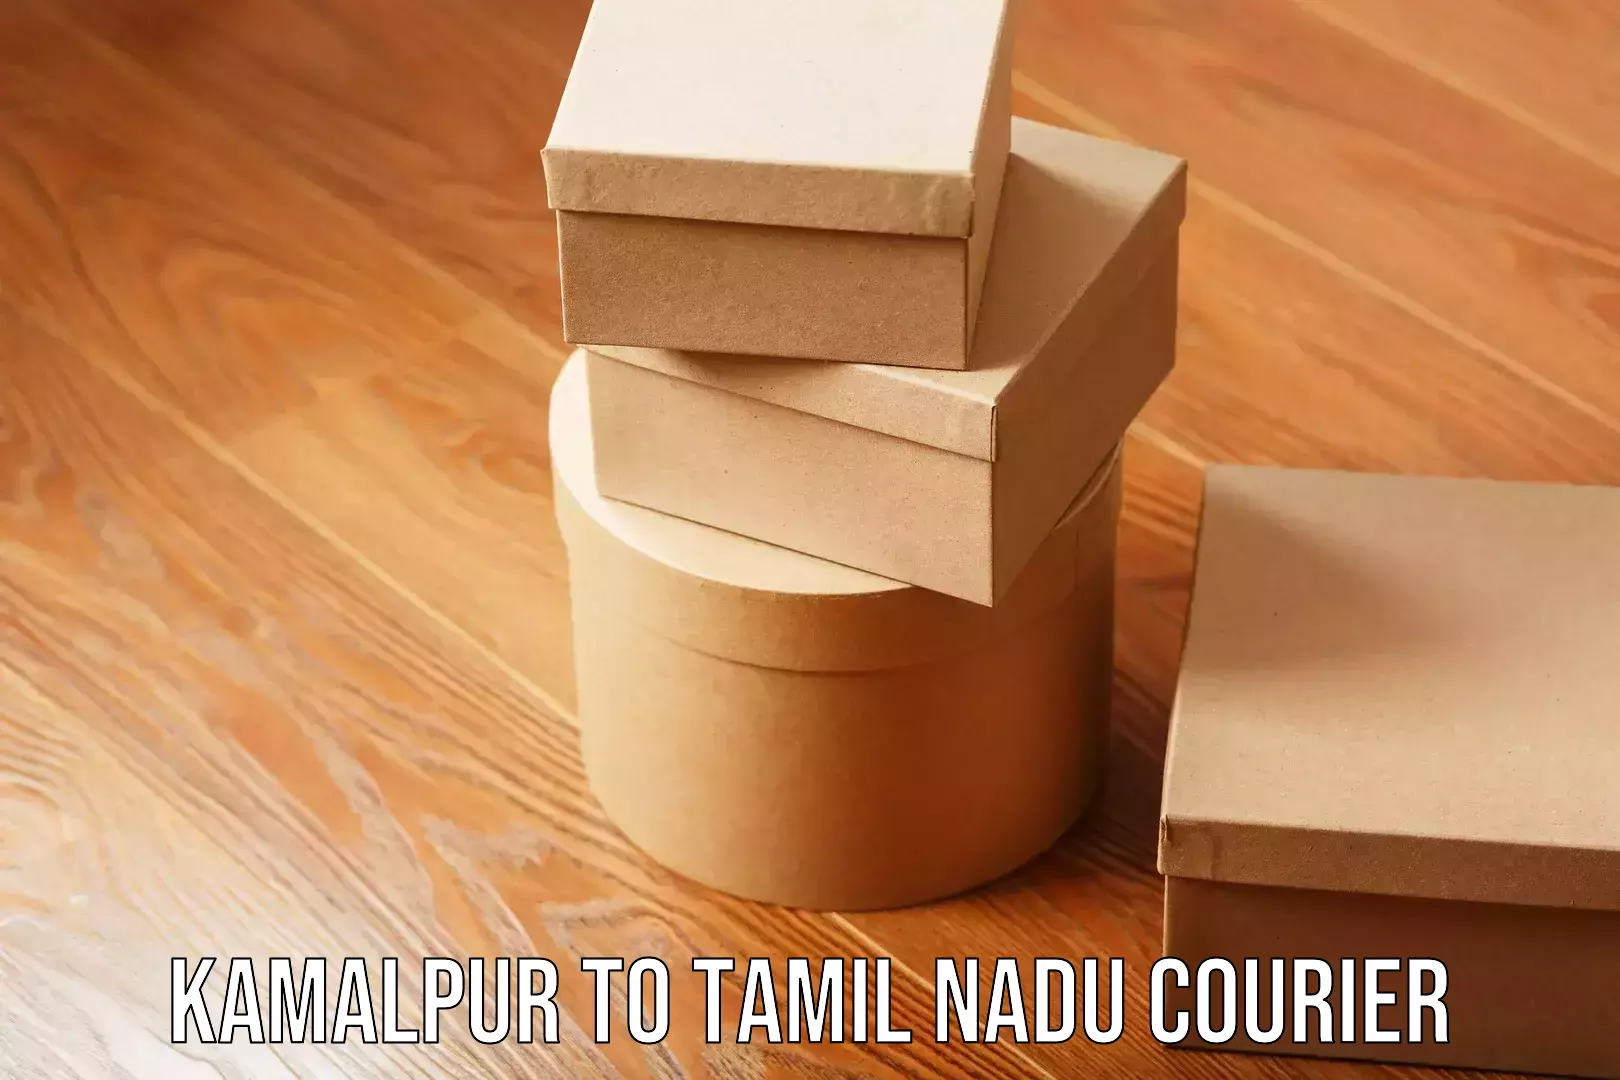 International courier networks Kamalpur to Tamil Nadu